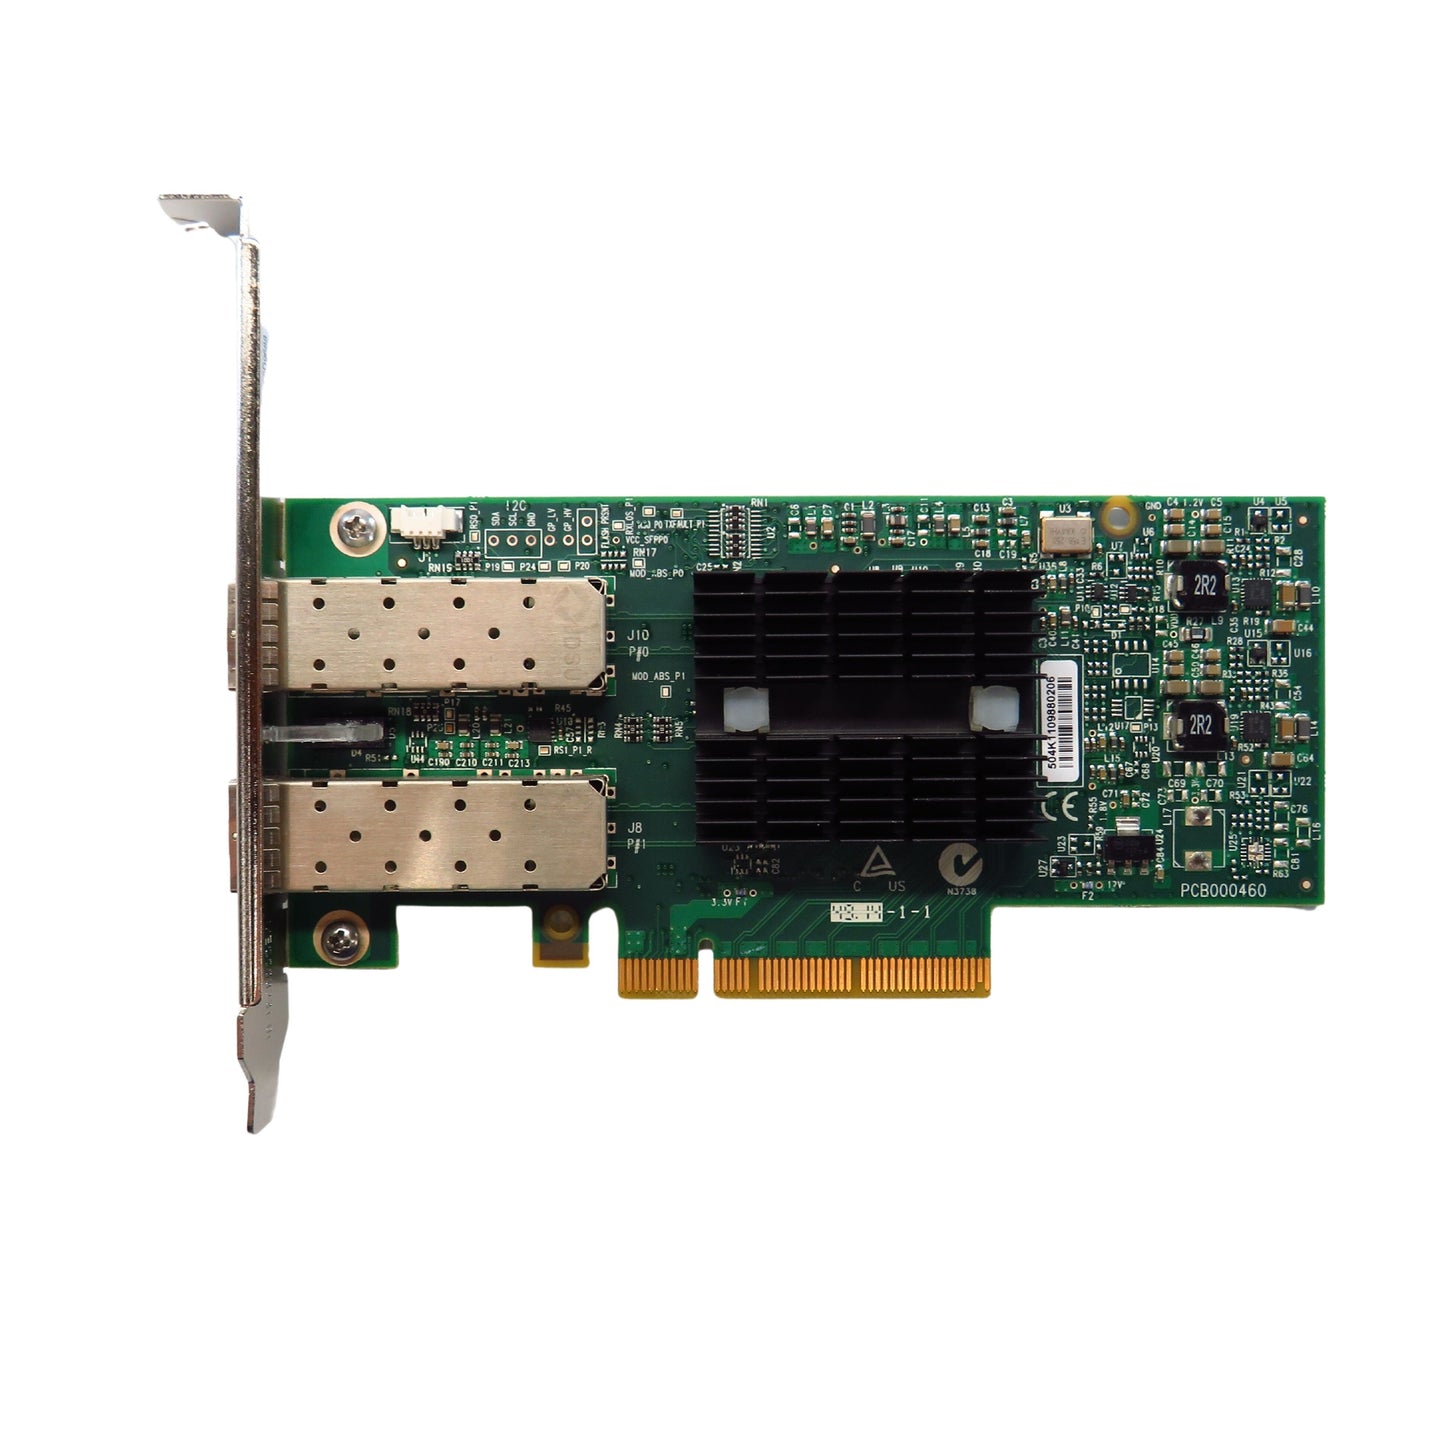 IBM 00D9692 CX312A Mellanox ConnectX- 3 10Gb Ethernet Adapter Card (Refurbished)